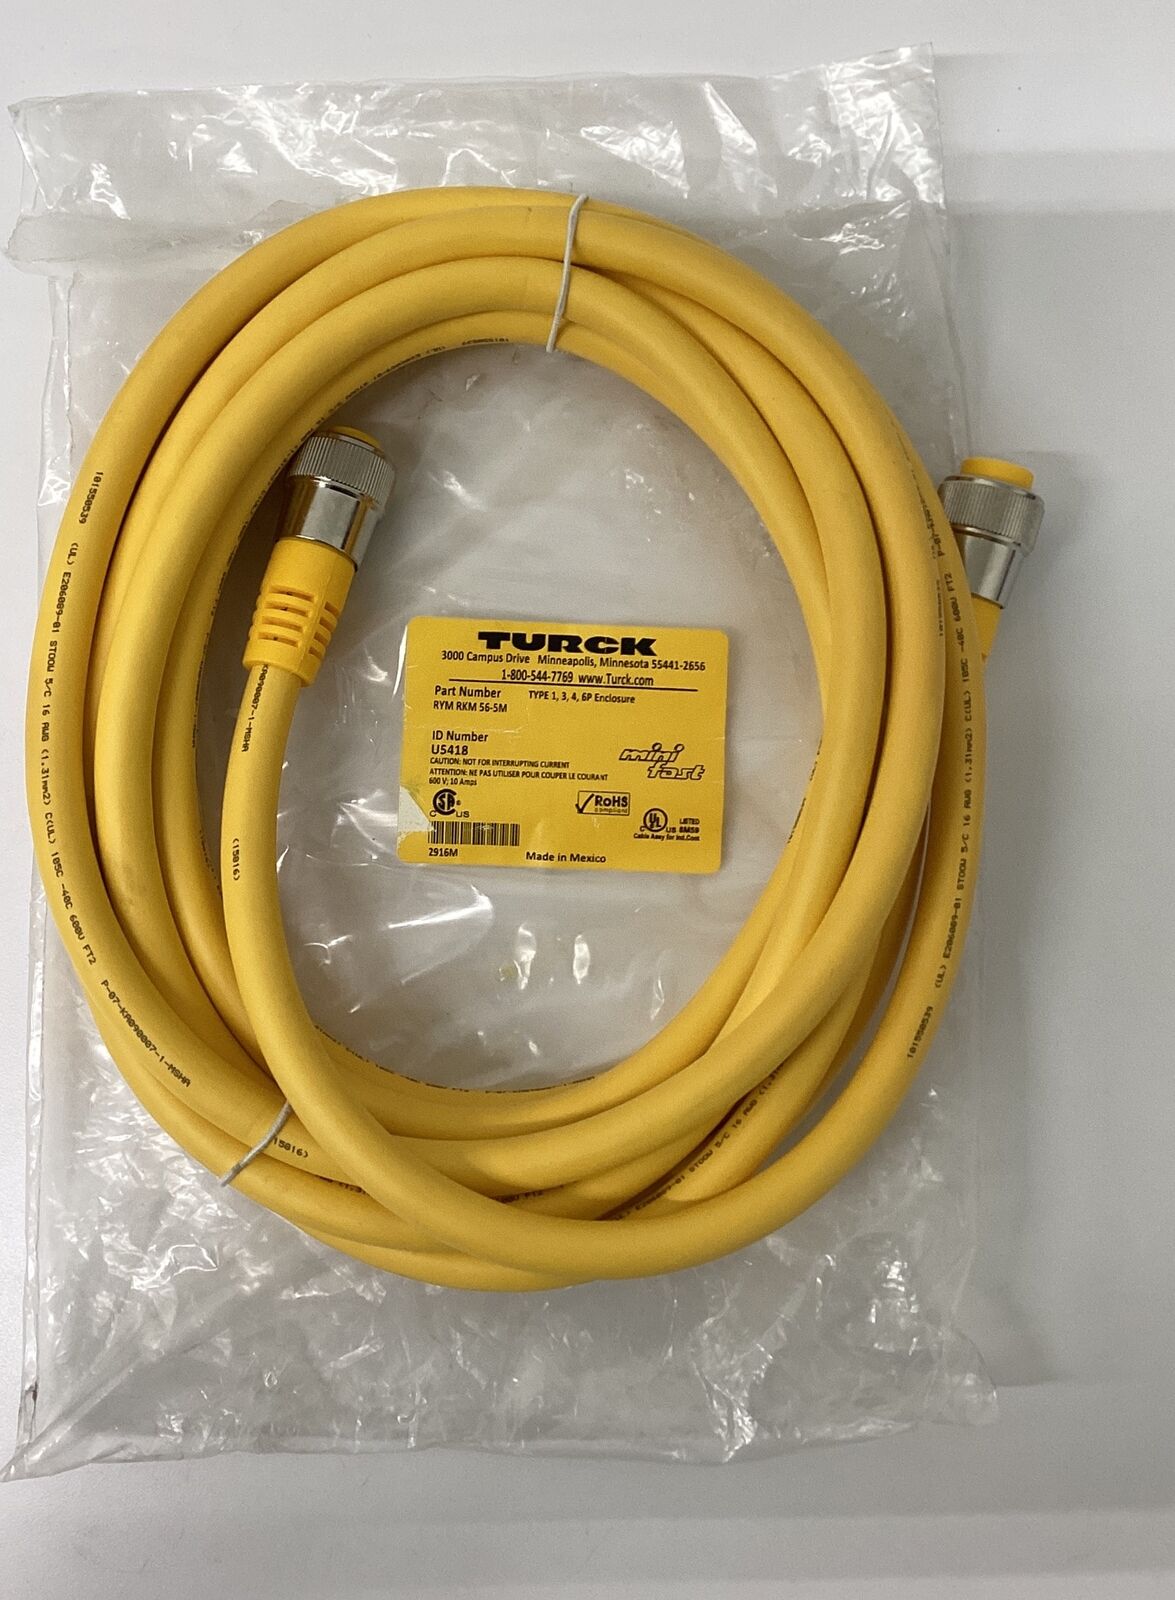 Turck RYM-RKM56-5M 5-Pole Male/Female Minifast Cable 5-meters (CBL162)